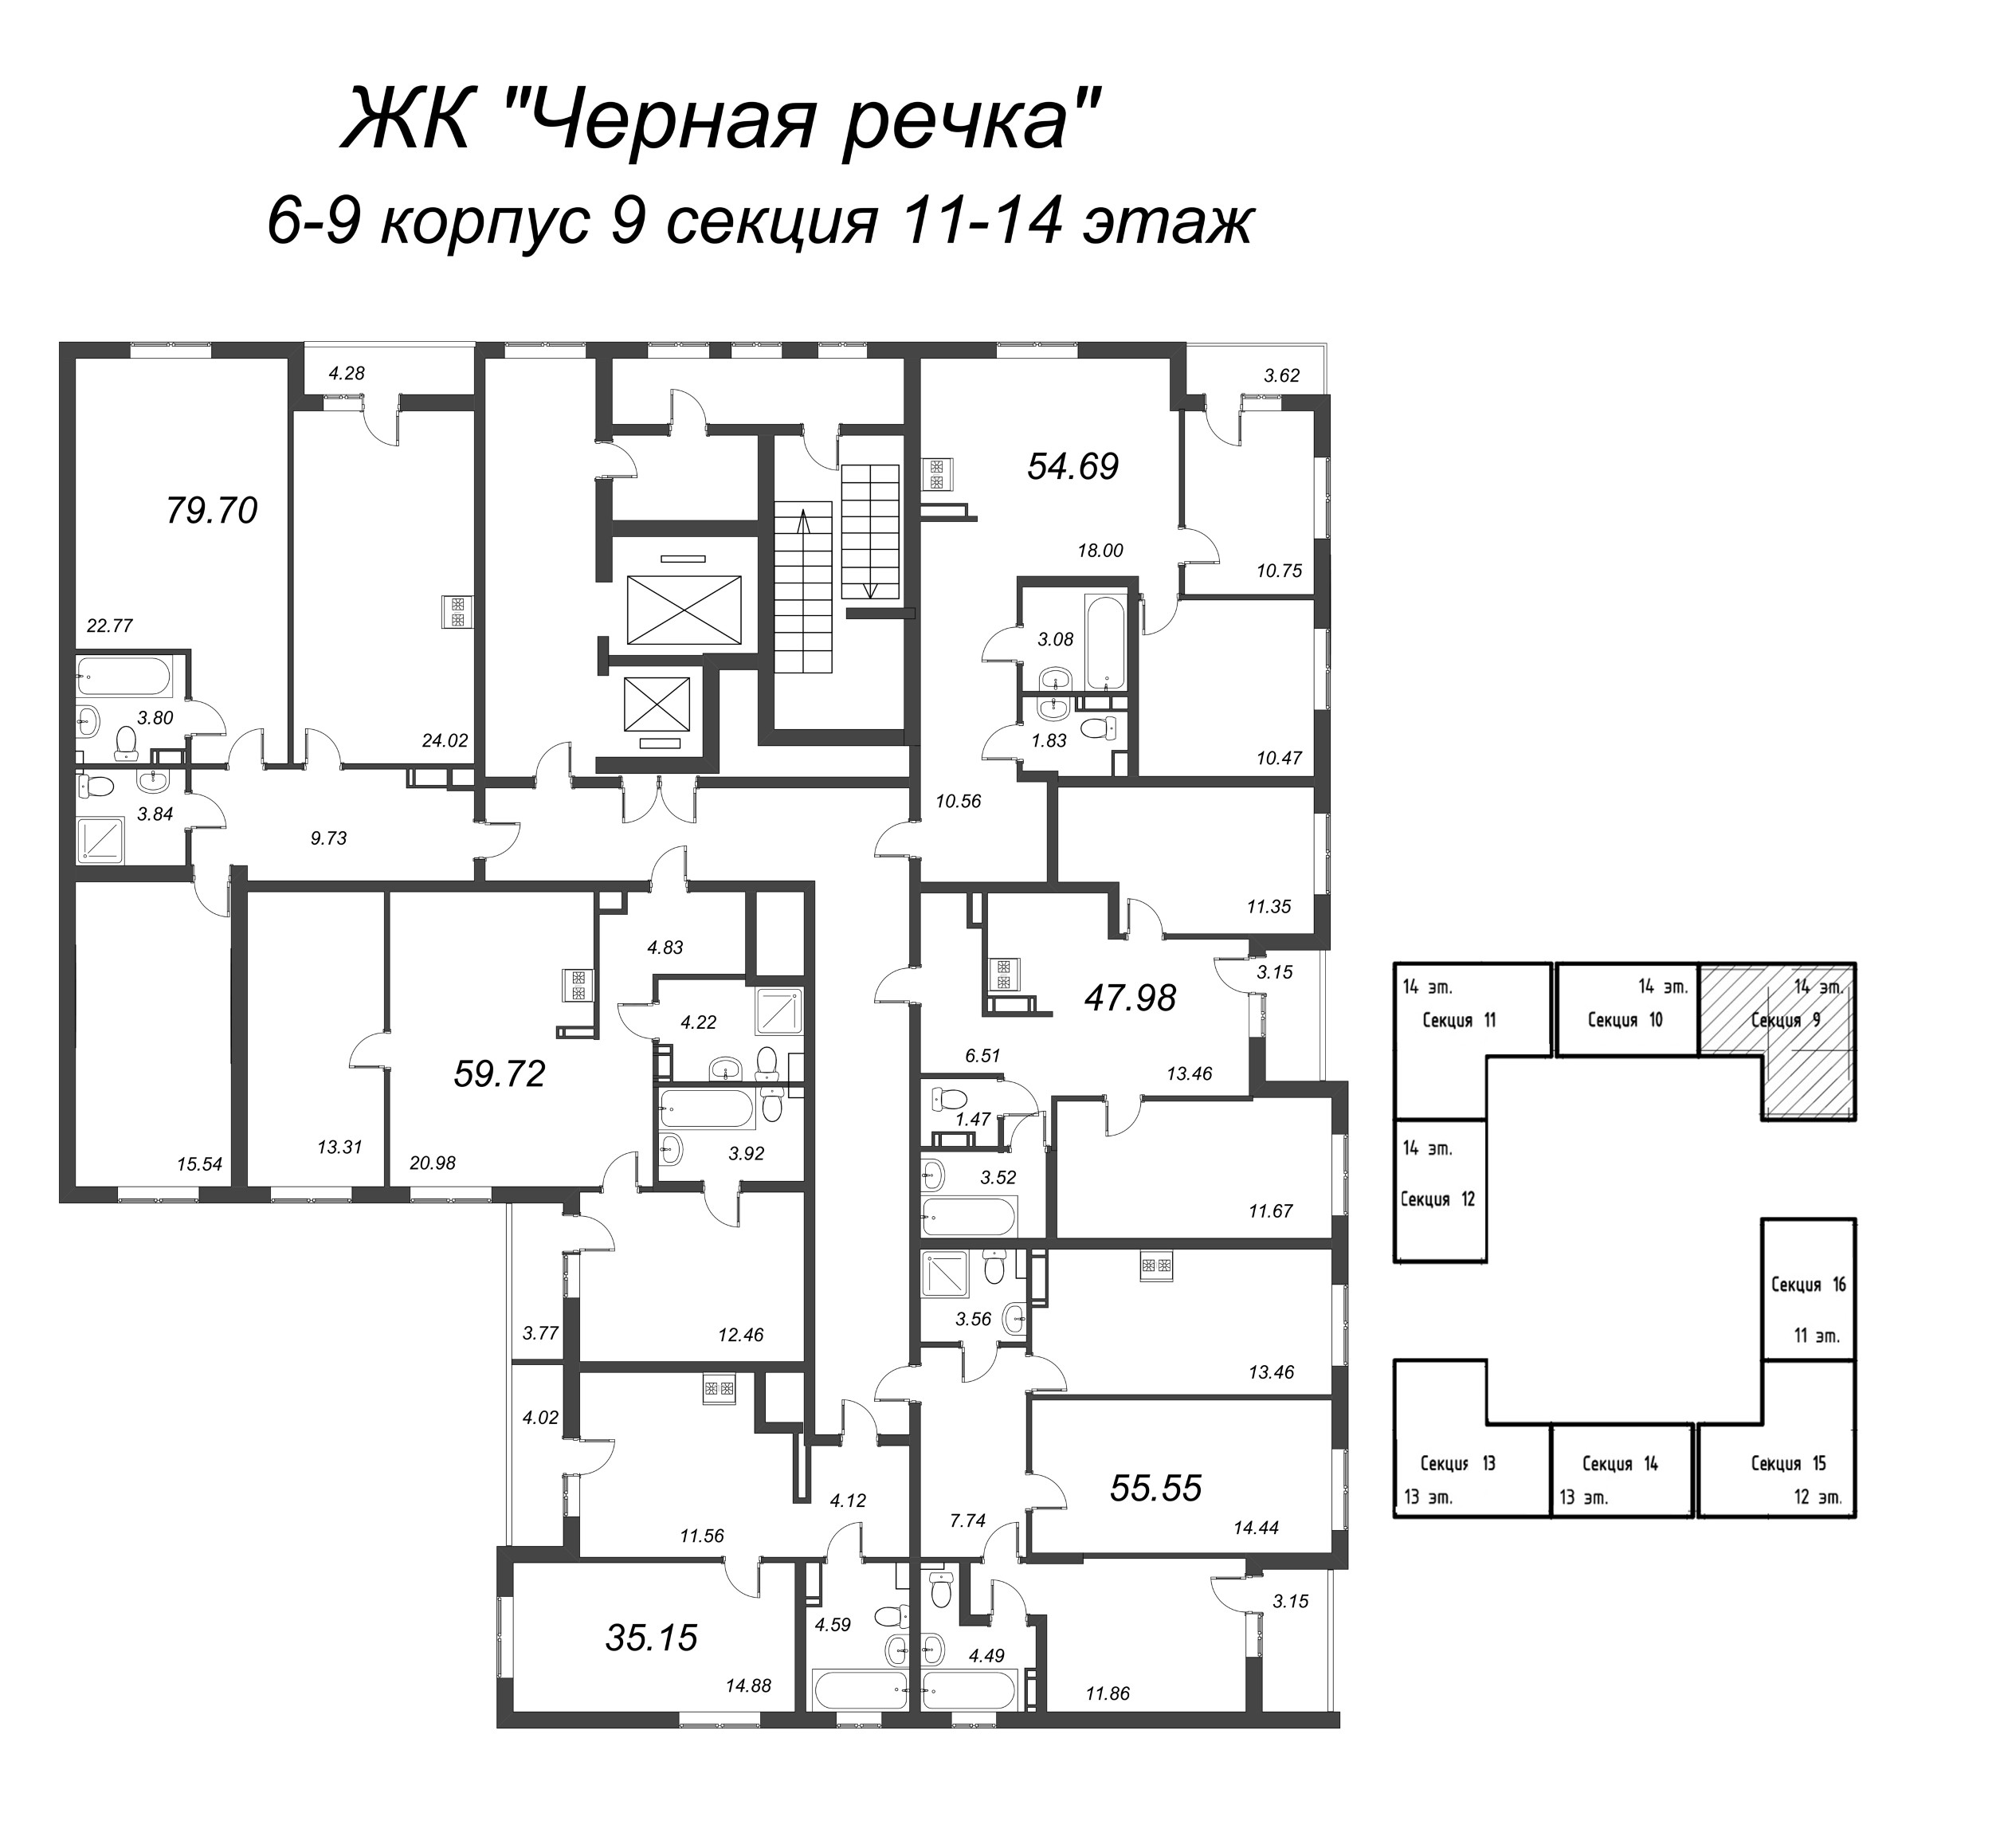 3-комнатная (Евро) квартира, 45.15 м² - планировка этажа